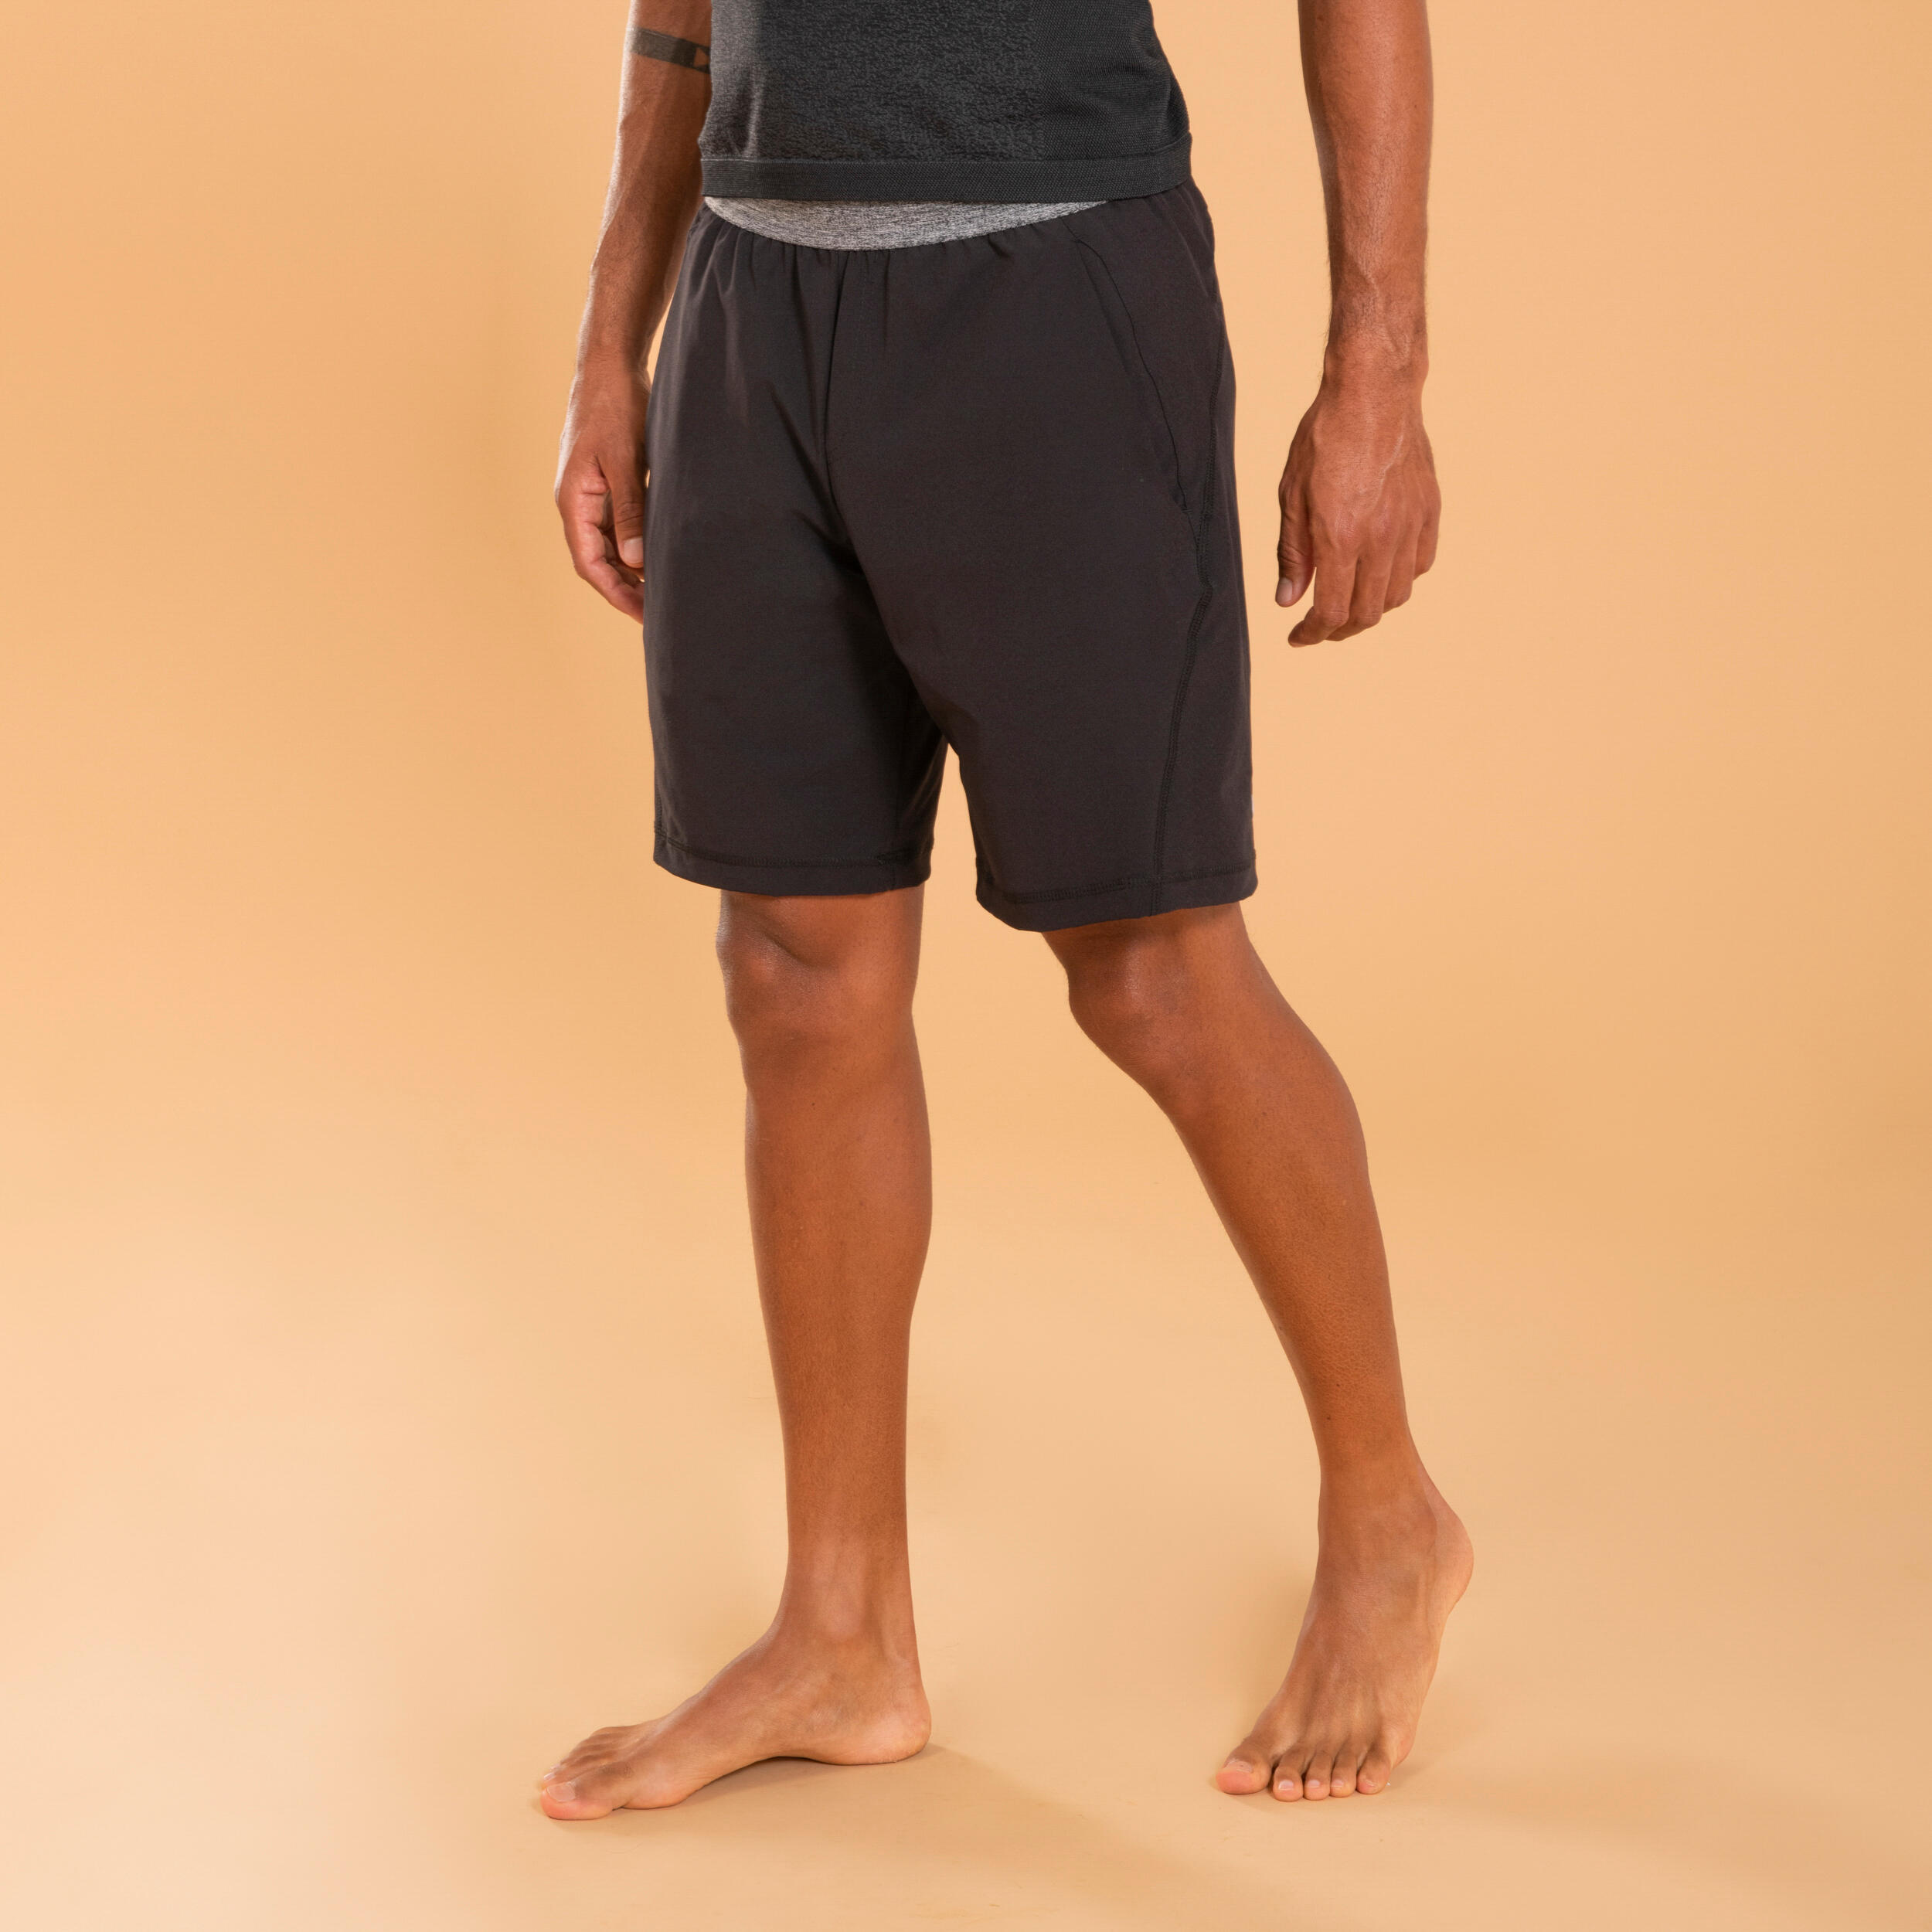 KIMJALY Men's Lightweight Dynamic Yoga Shorts - Black